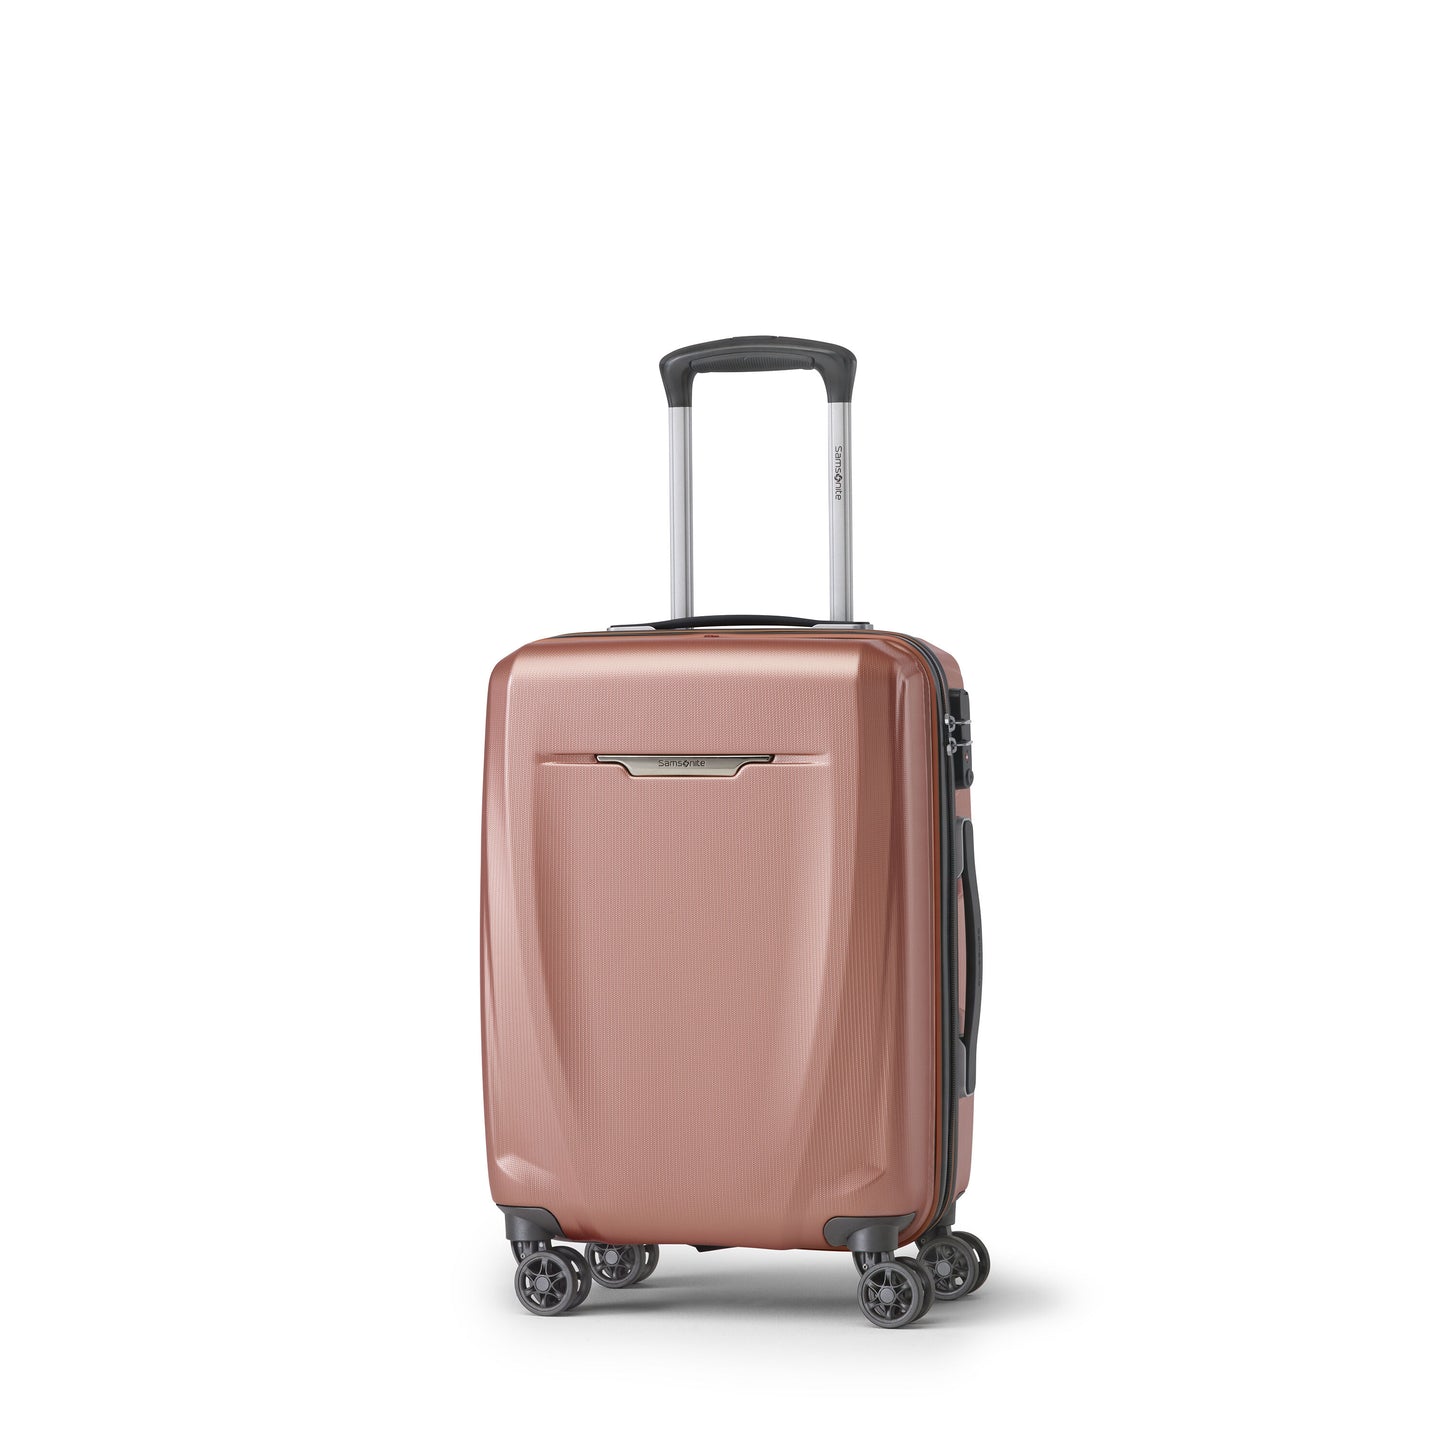 Samsonite Pursuit DLX Plus Hardside Spinner Suitcase